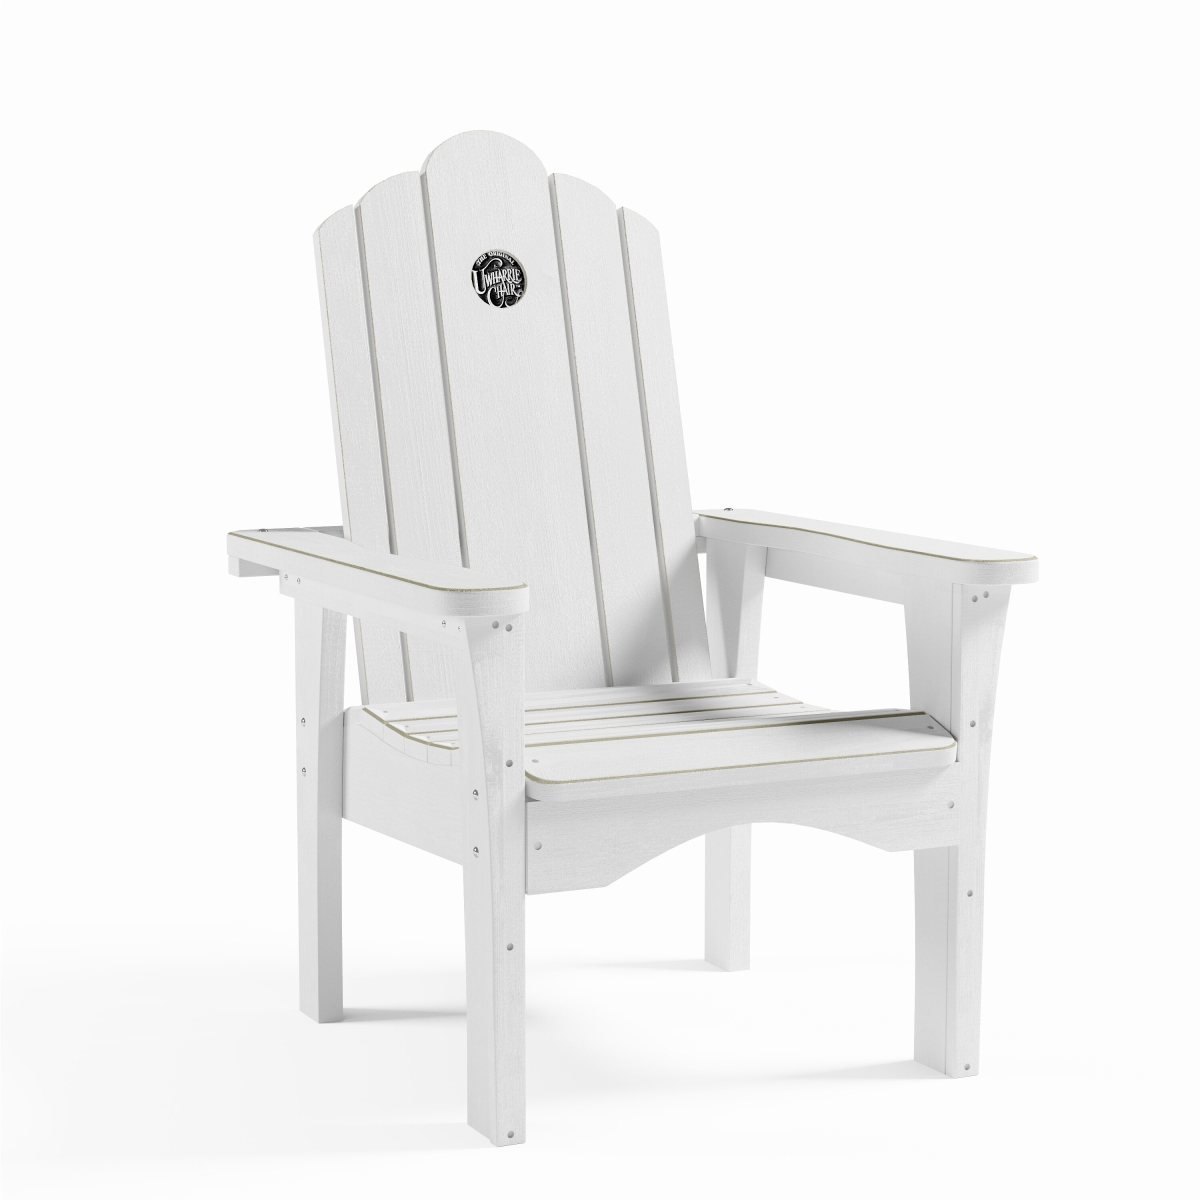 S114-028 Original Wood Lounge Chair, Robins Egg Pine - 30.5 X 33.5 X 43.5 In.